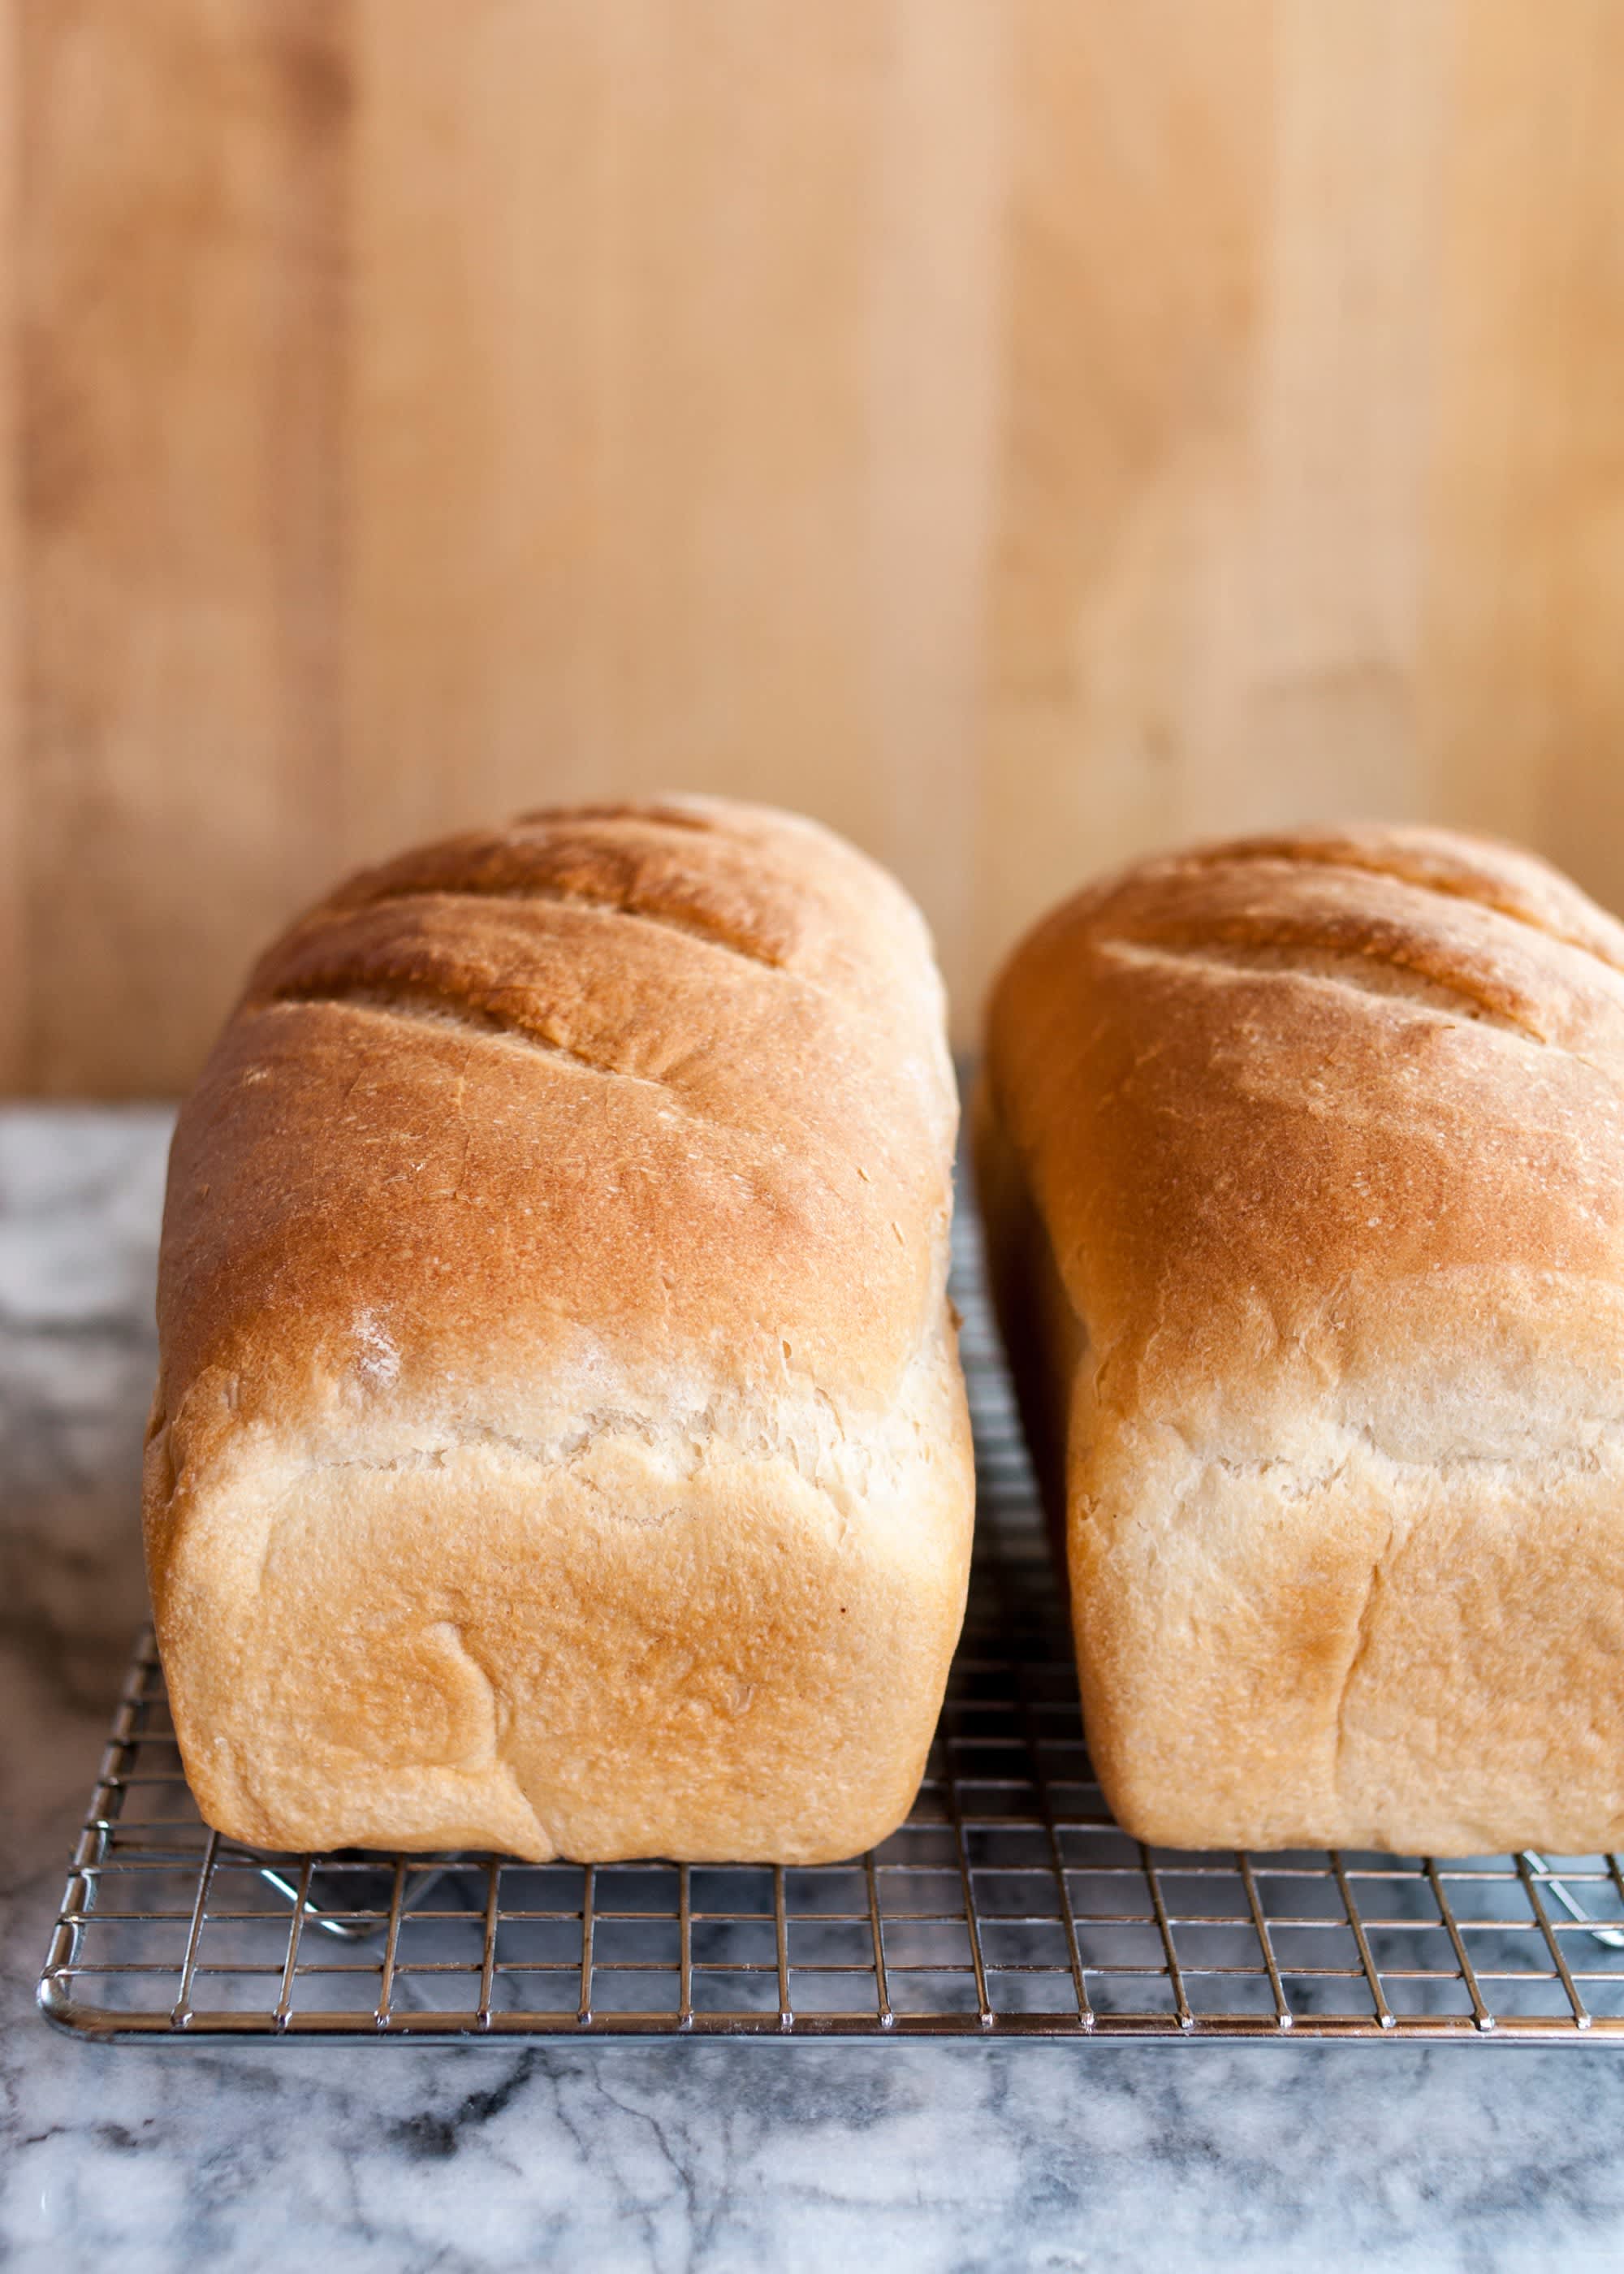 Sourdough Sandwich Bread using Bread Starter - Hostess At Heart